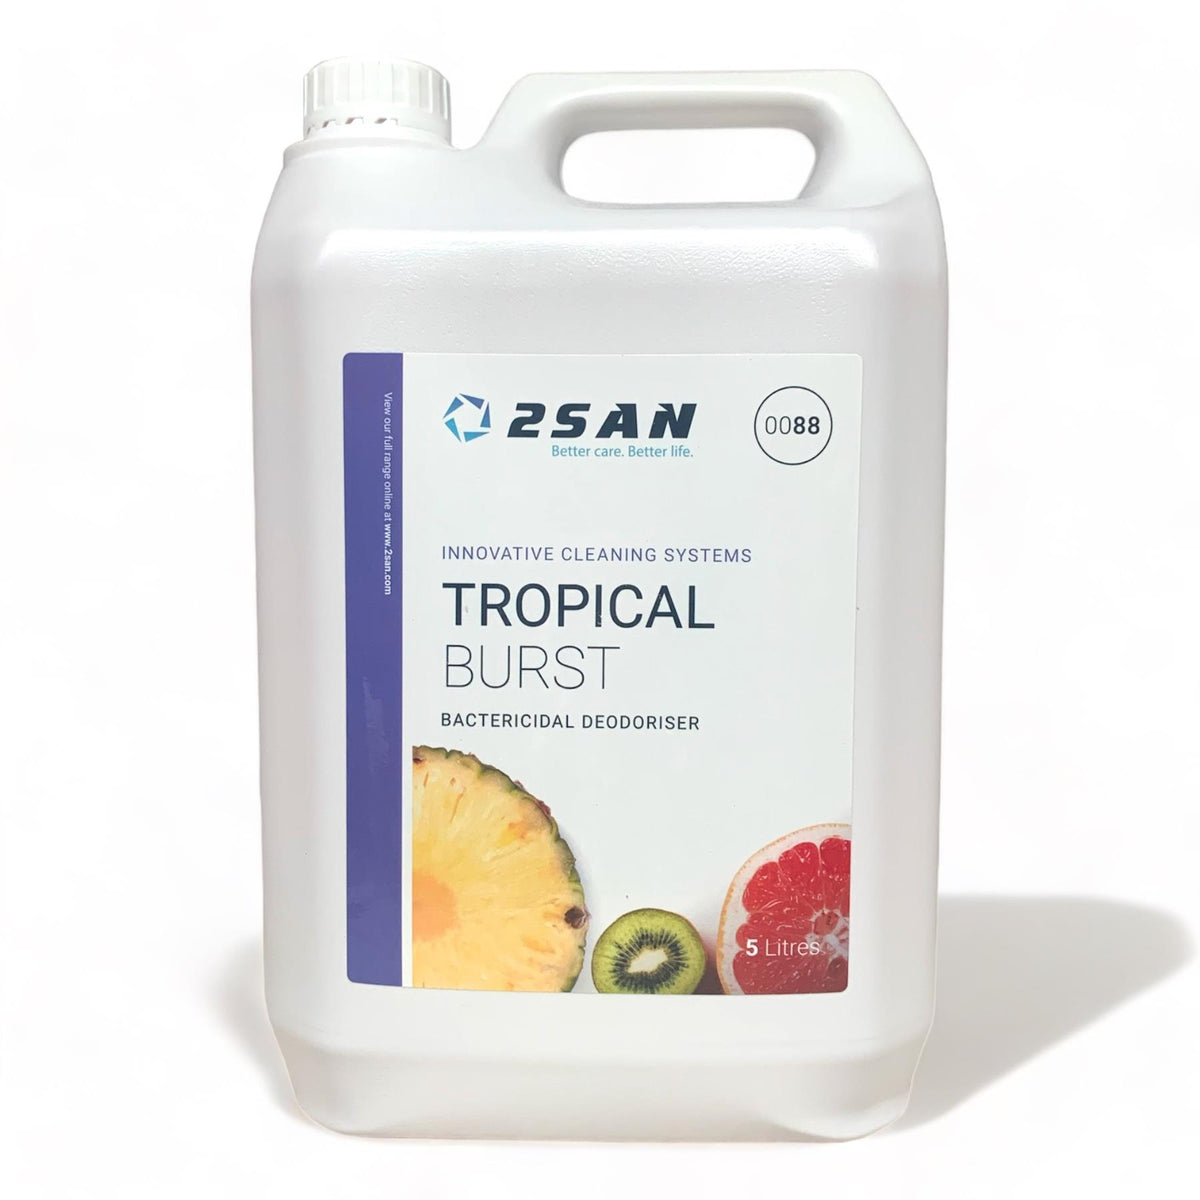 2SAN Tropical Burst Bactericidal Deodoriser 5 Litre